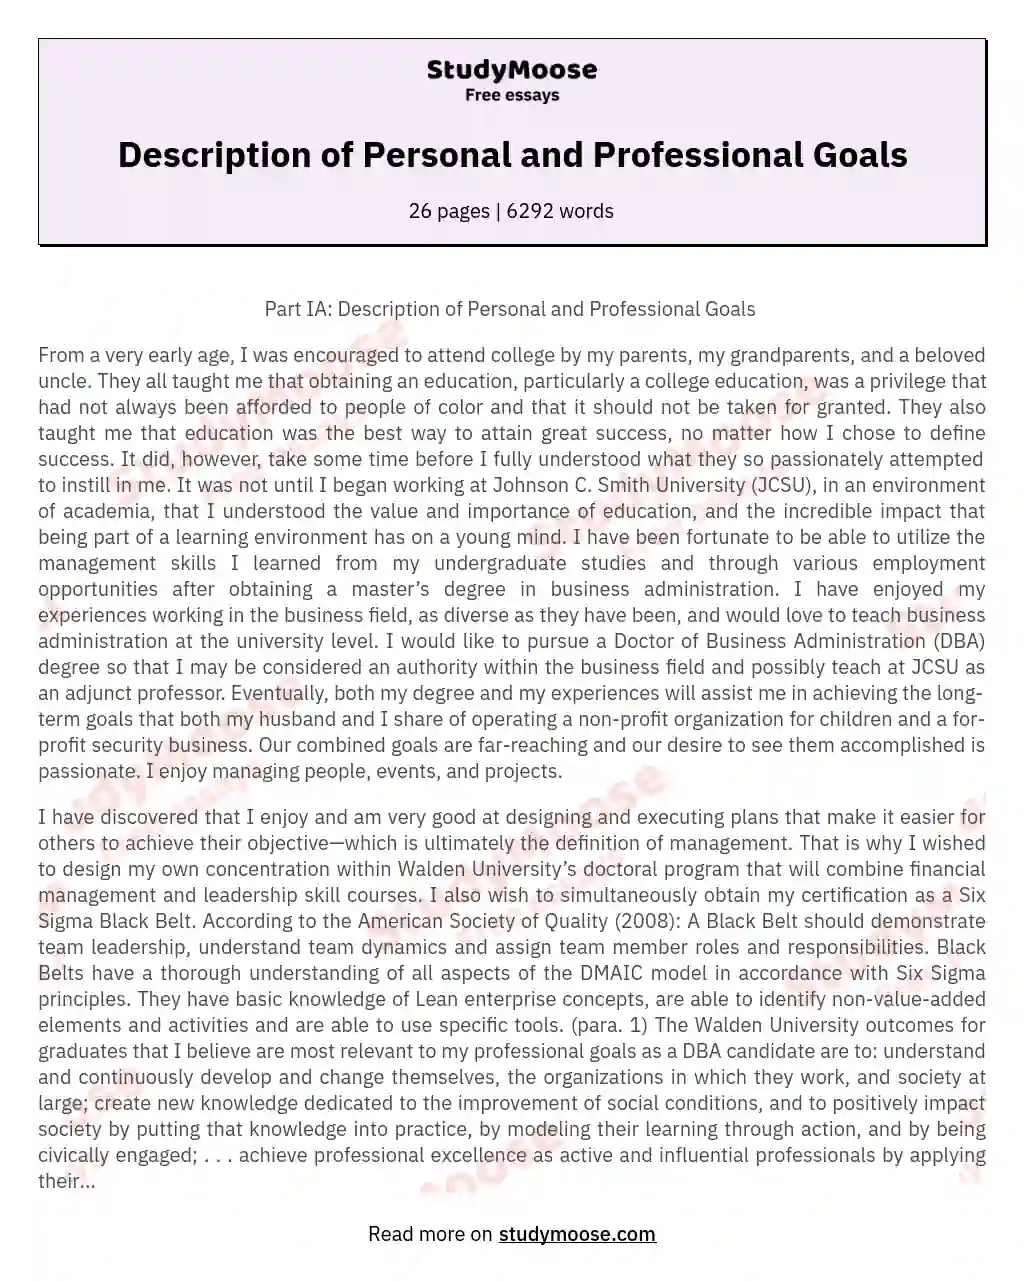 Description of Personal and Professional Goals